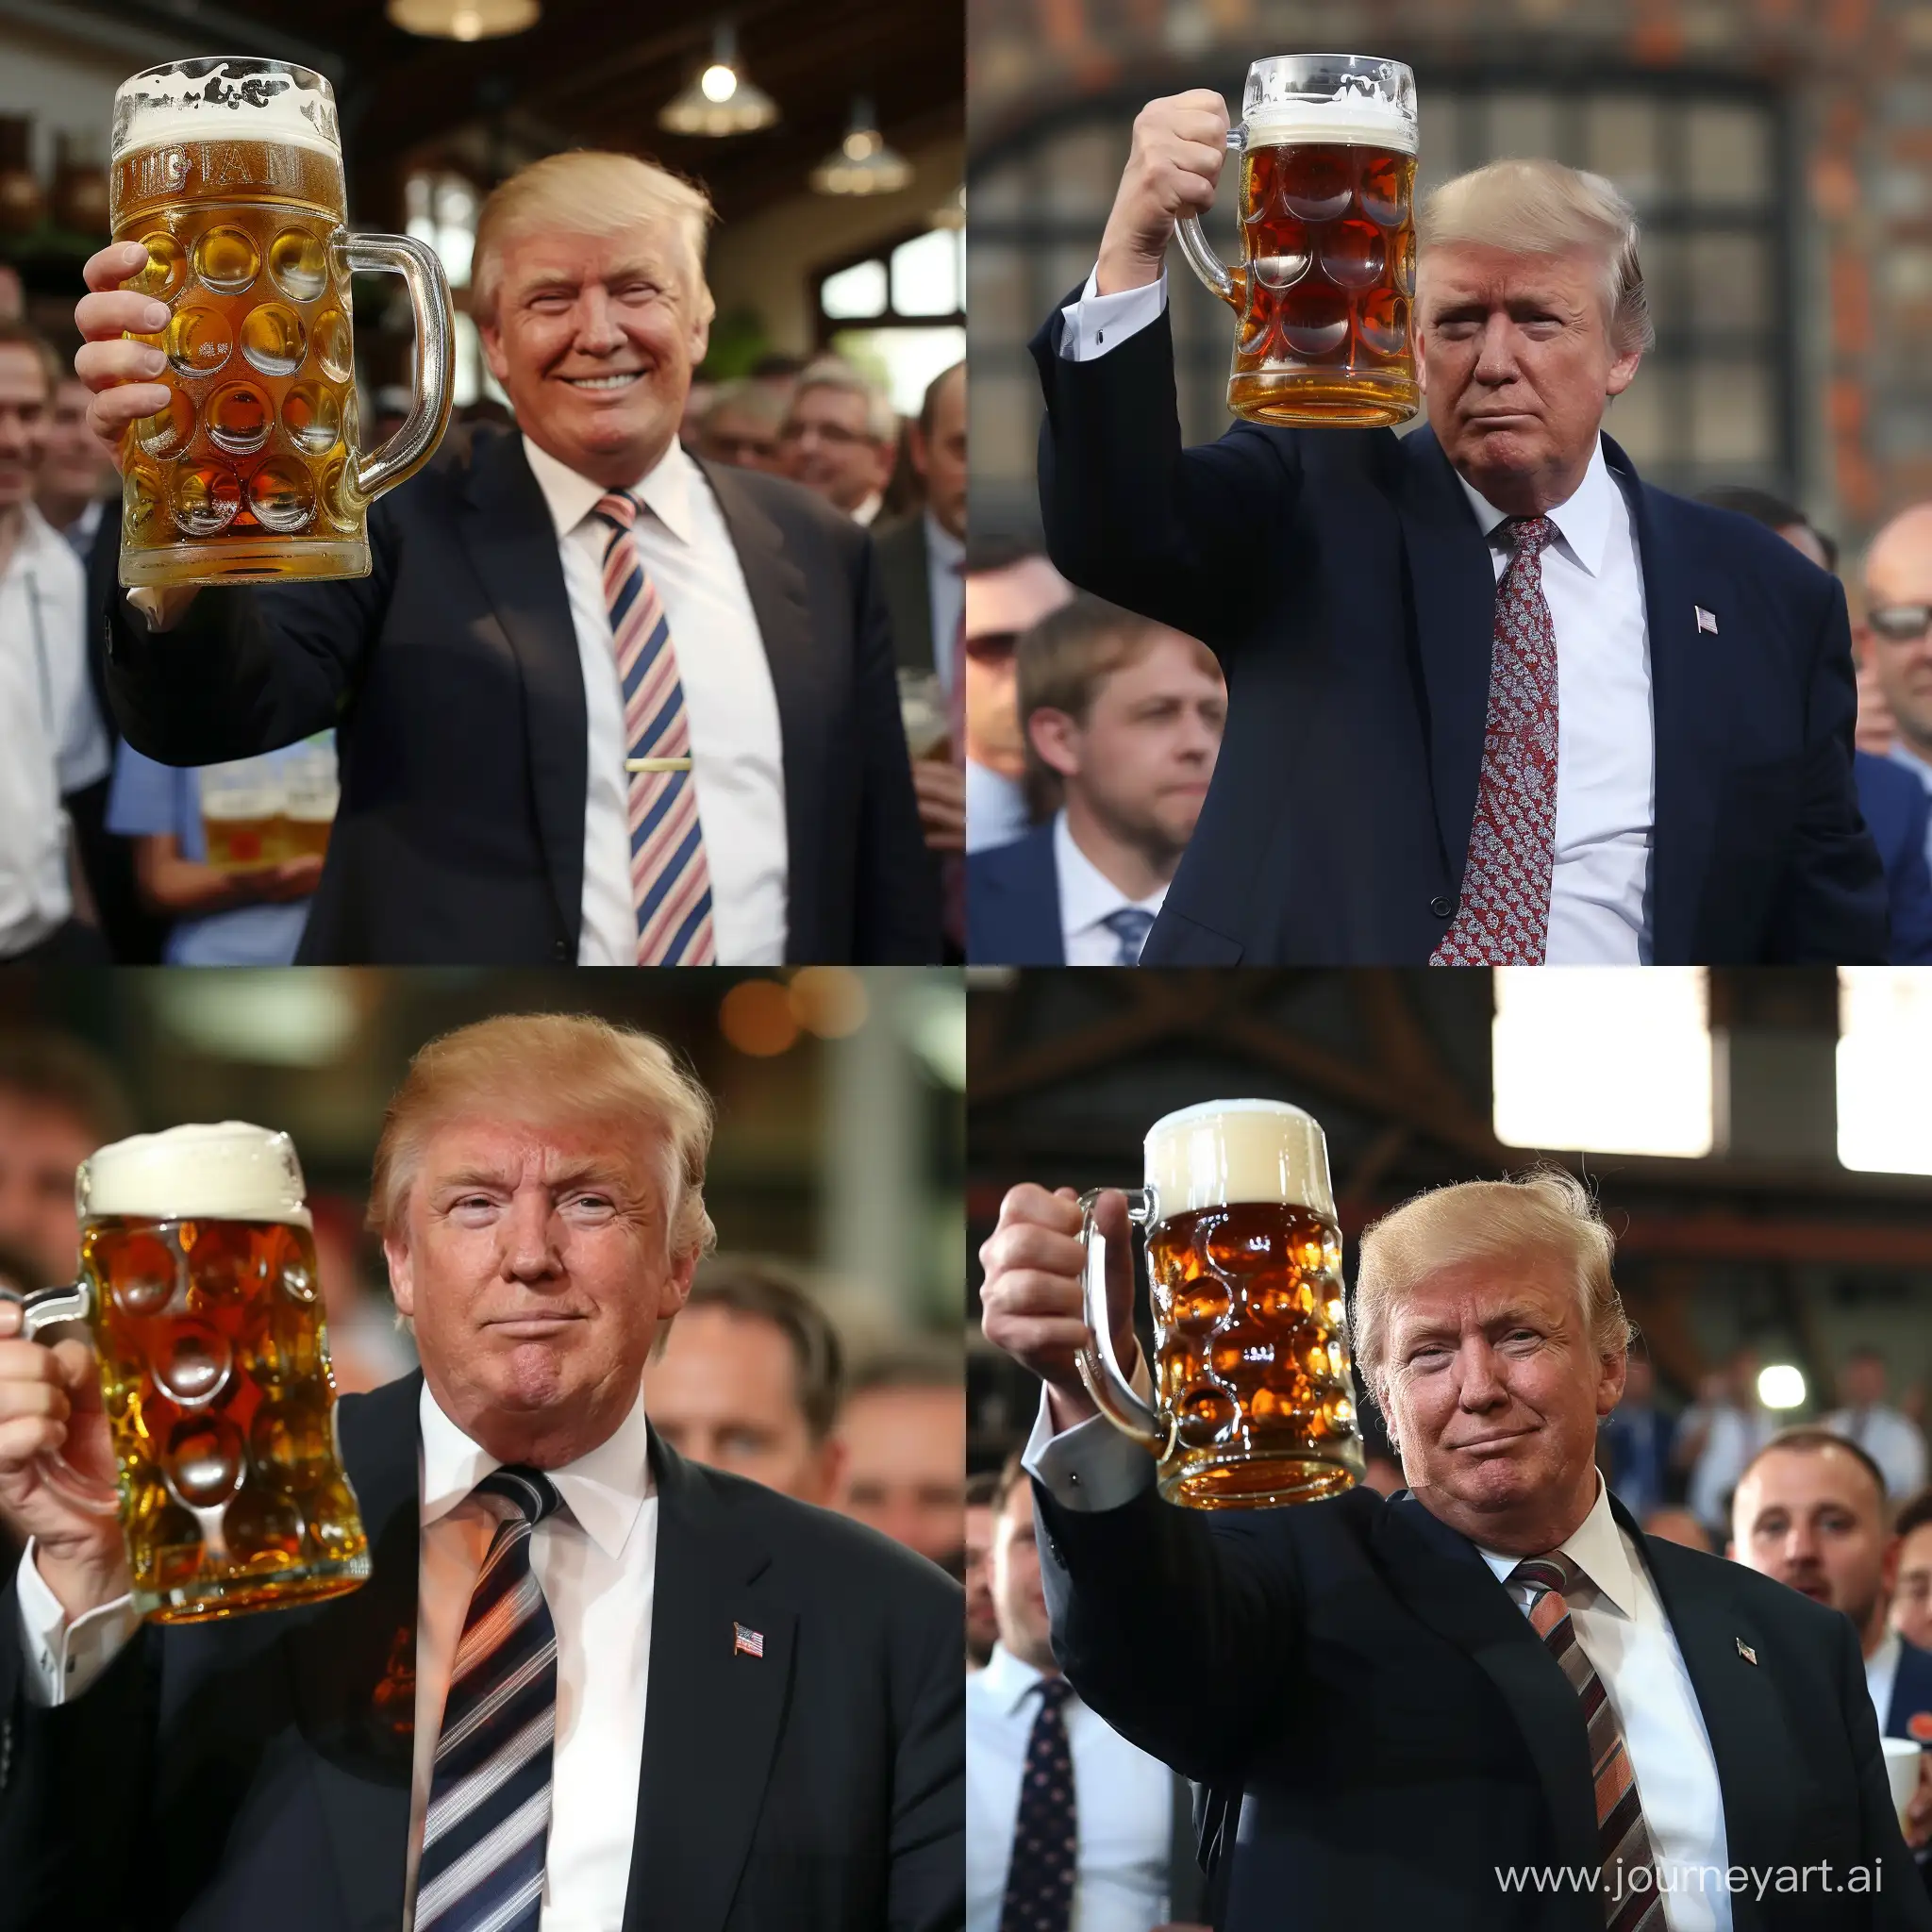 Donald-Trump-Celebrating-Oktoberfest-with-a-Raised-Beer